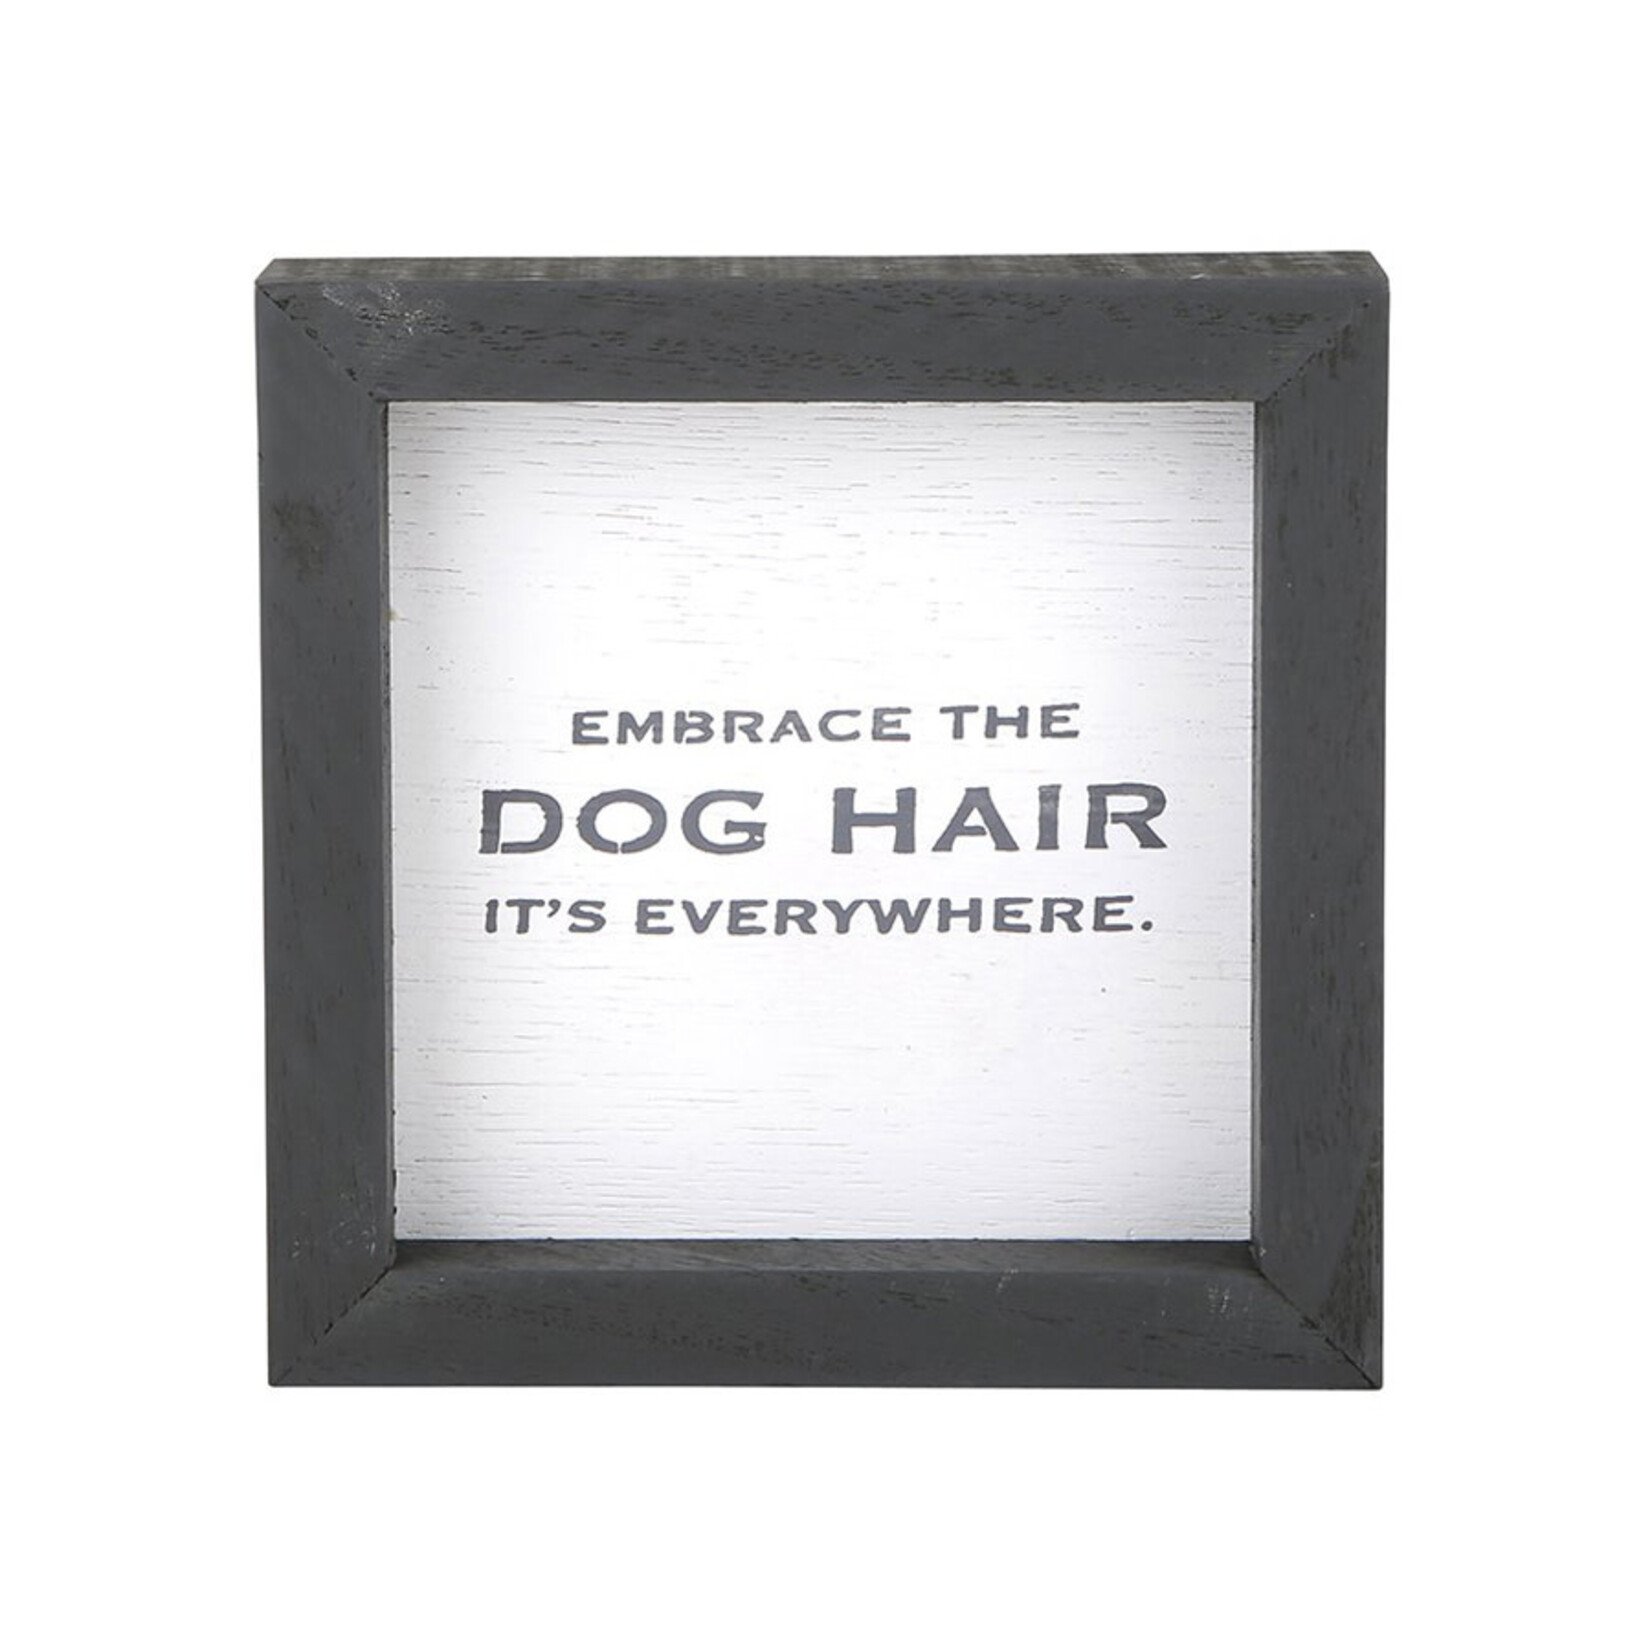 Creative Brands Dog Hair Sign